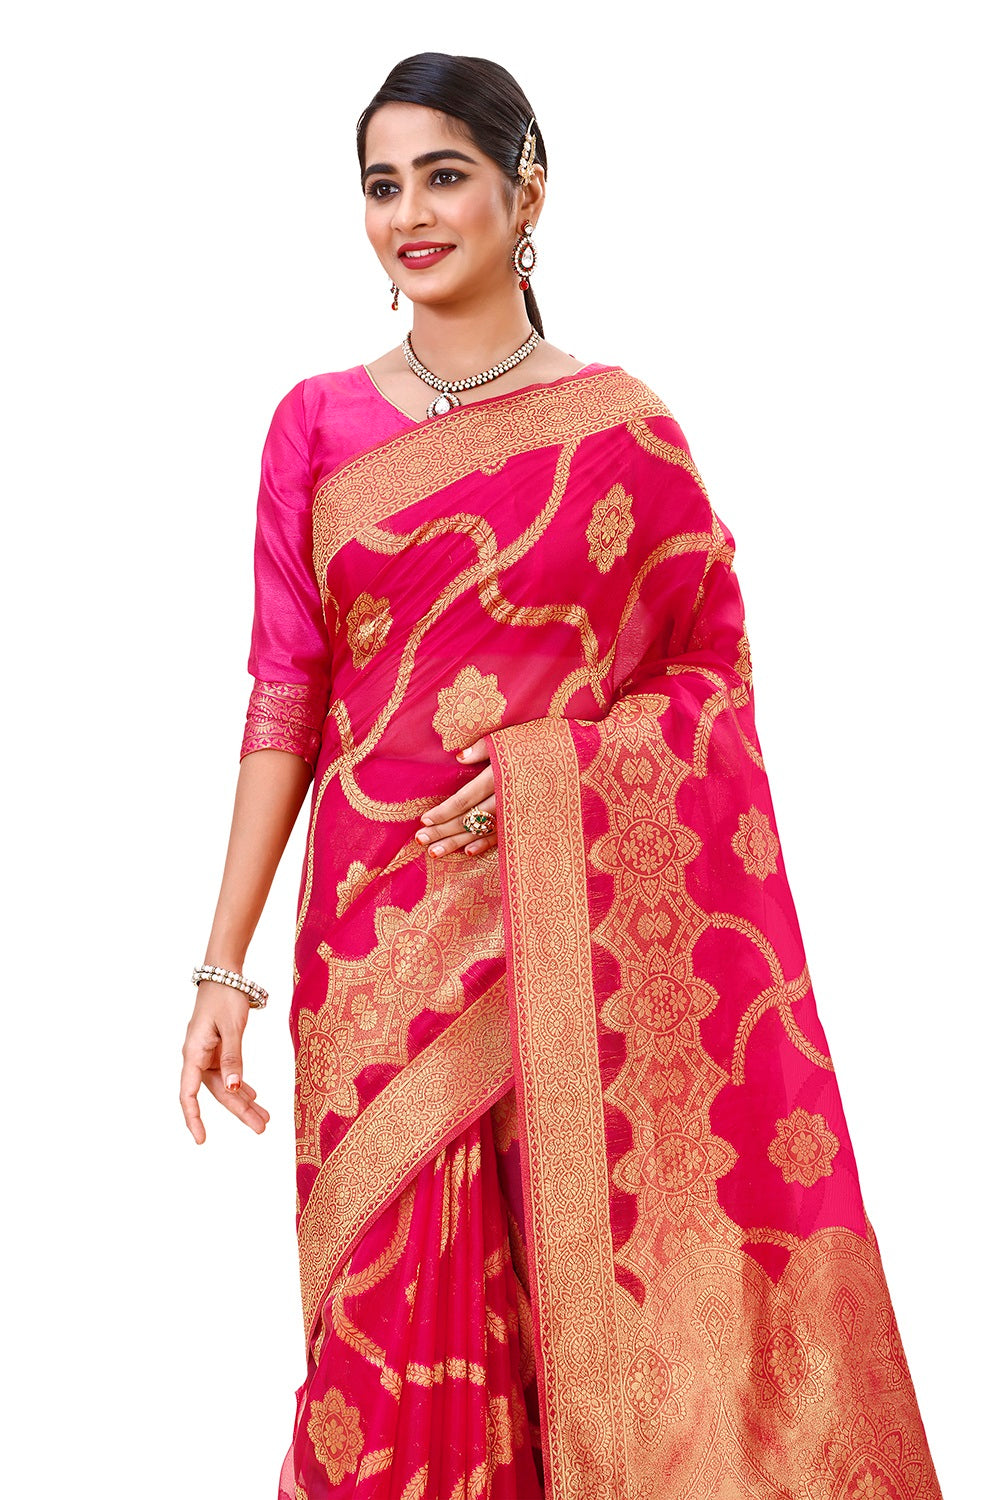 Buy trending designer Rani Pink Color Silk saree at best price online